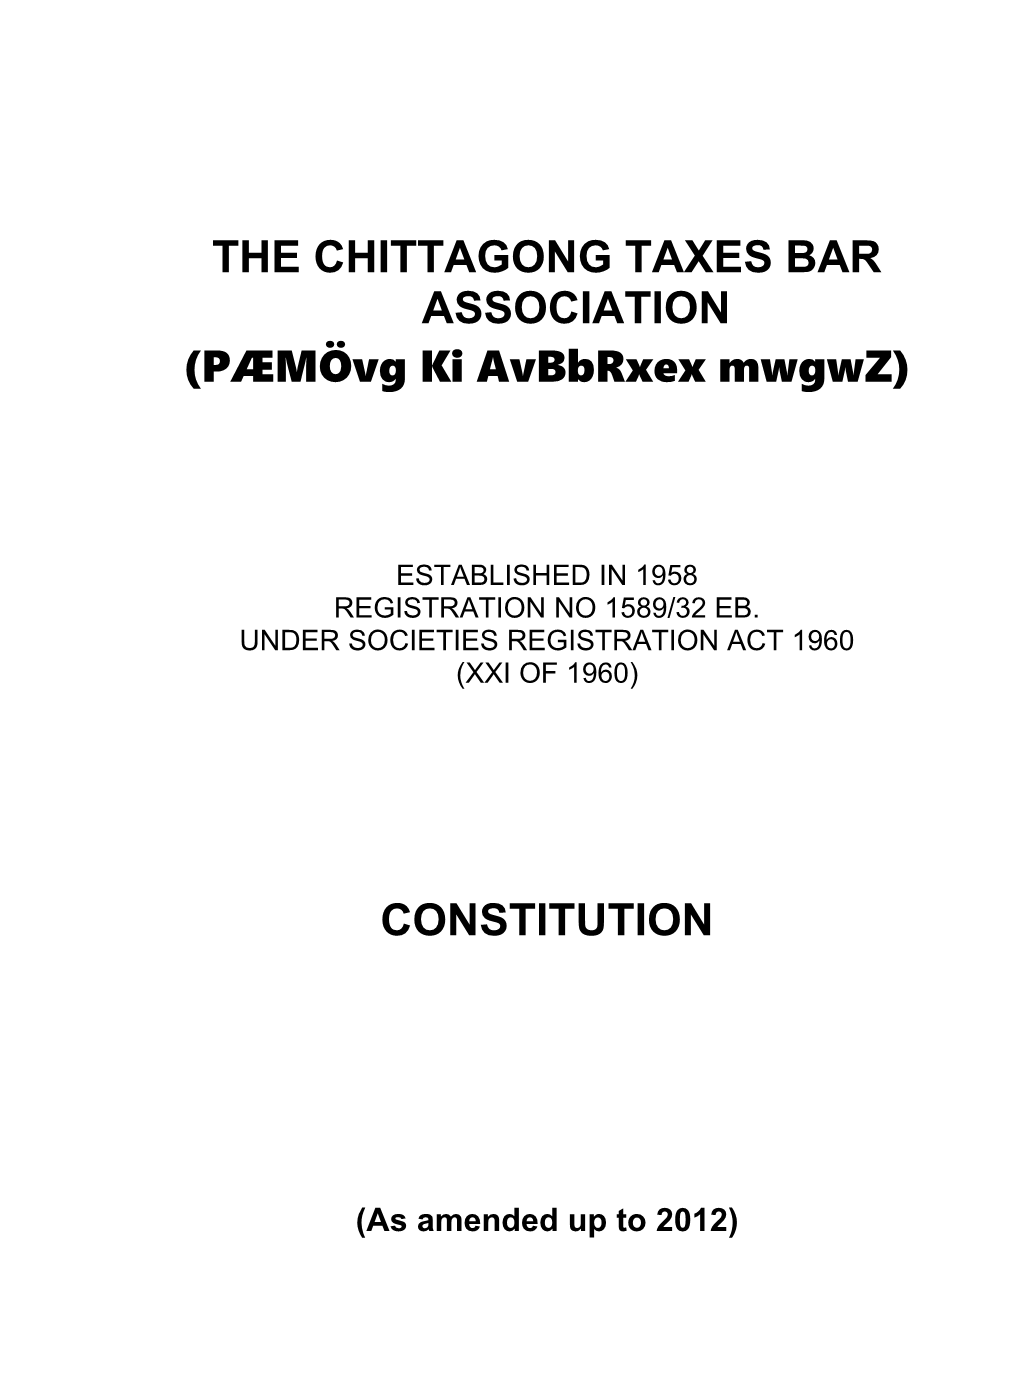 The Chittagong Taxes Bar Association